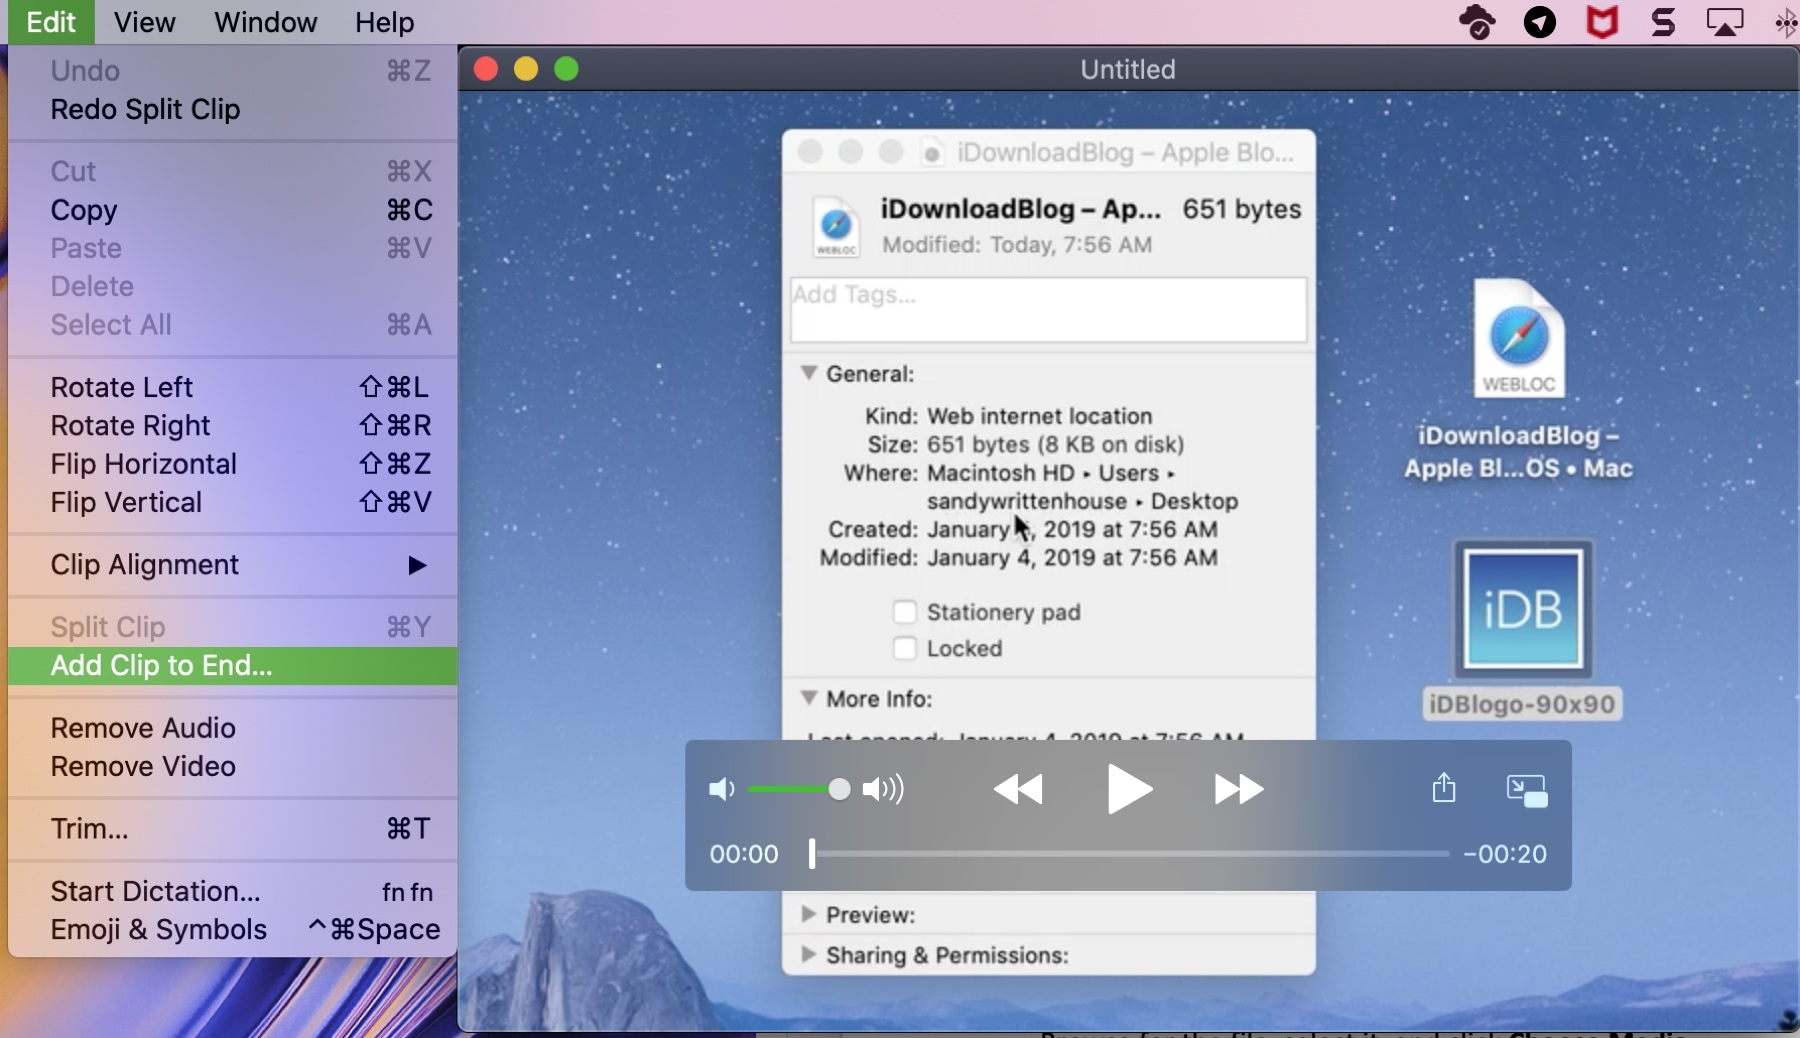 quicktime player download mac